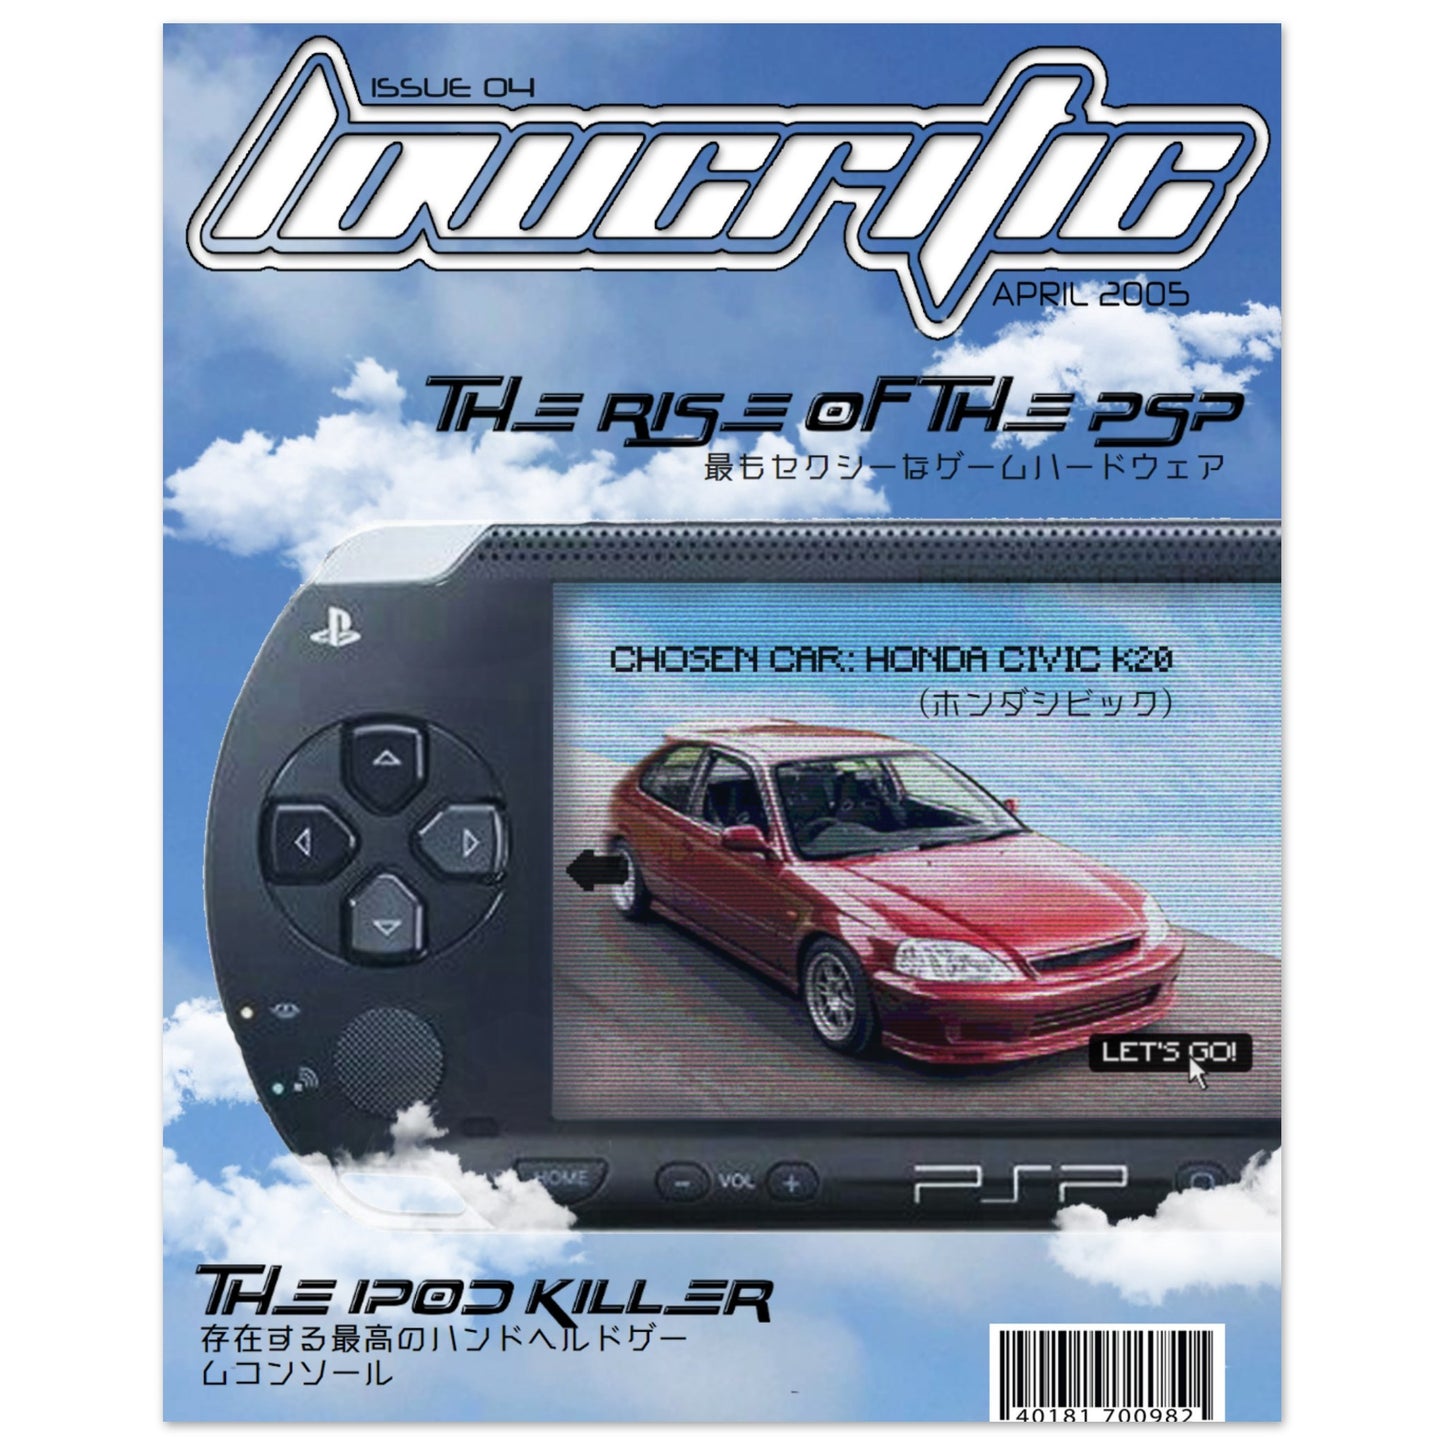 PSP Honda Civic Poster